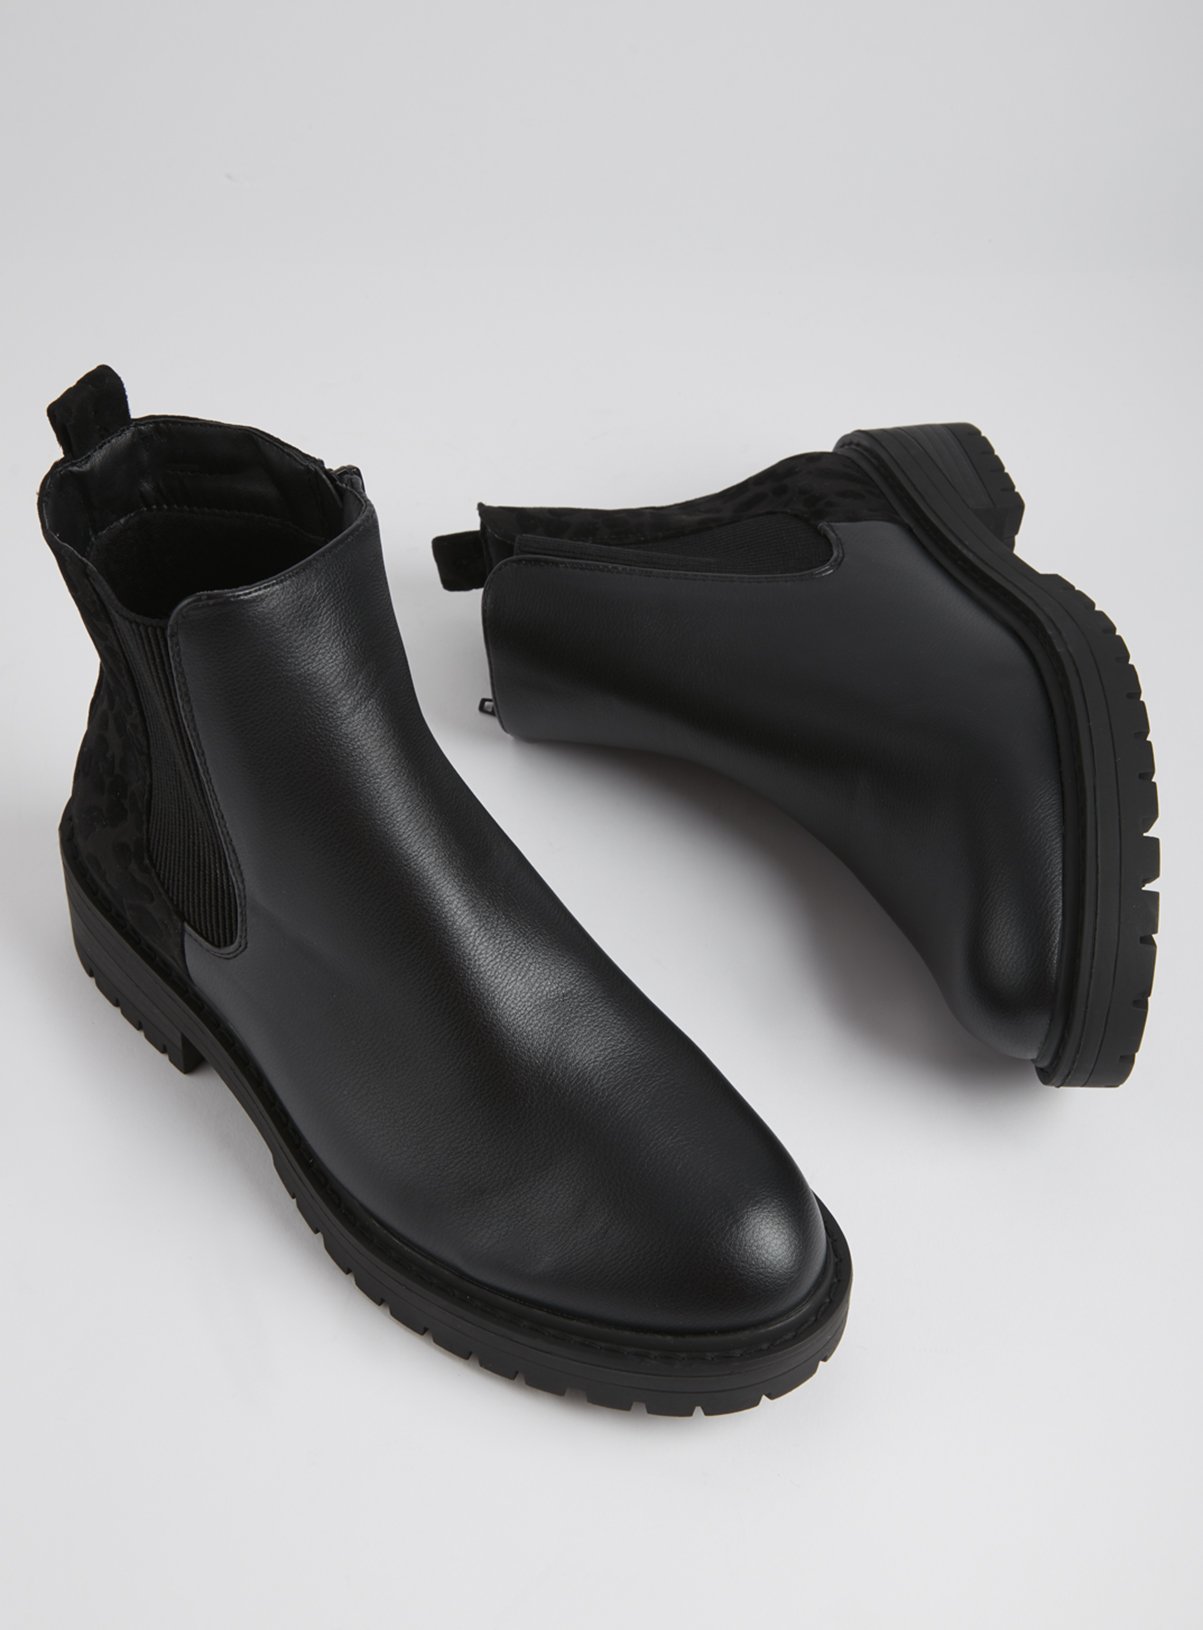 black animal print boots